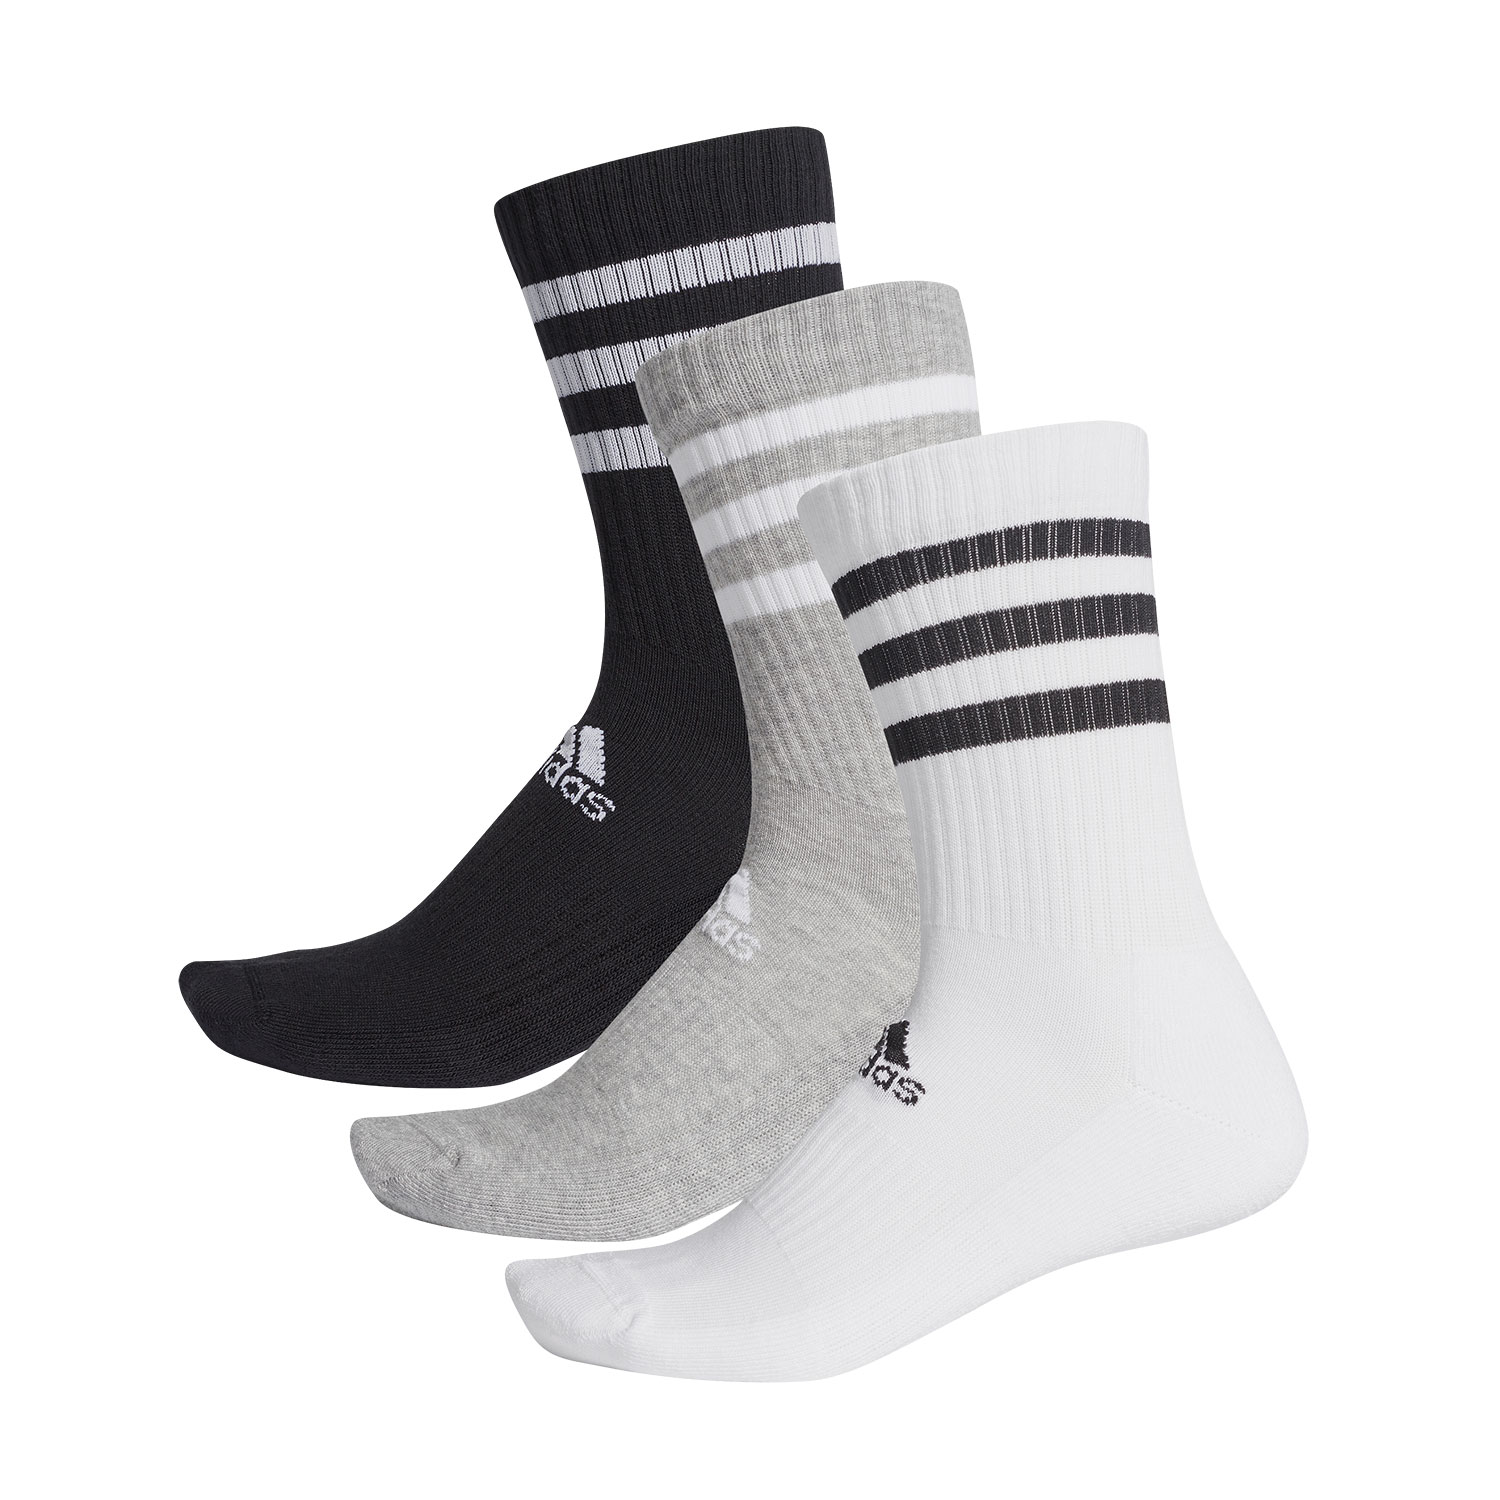 Adidas 3 Stripes Cushioned Crew x 3 Socks - Grey Heather/White/Black